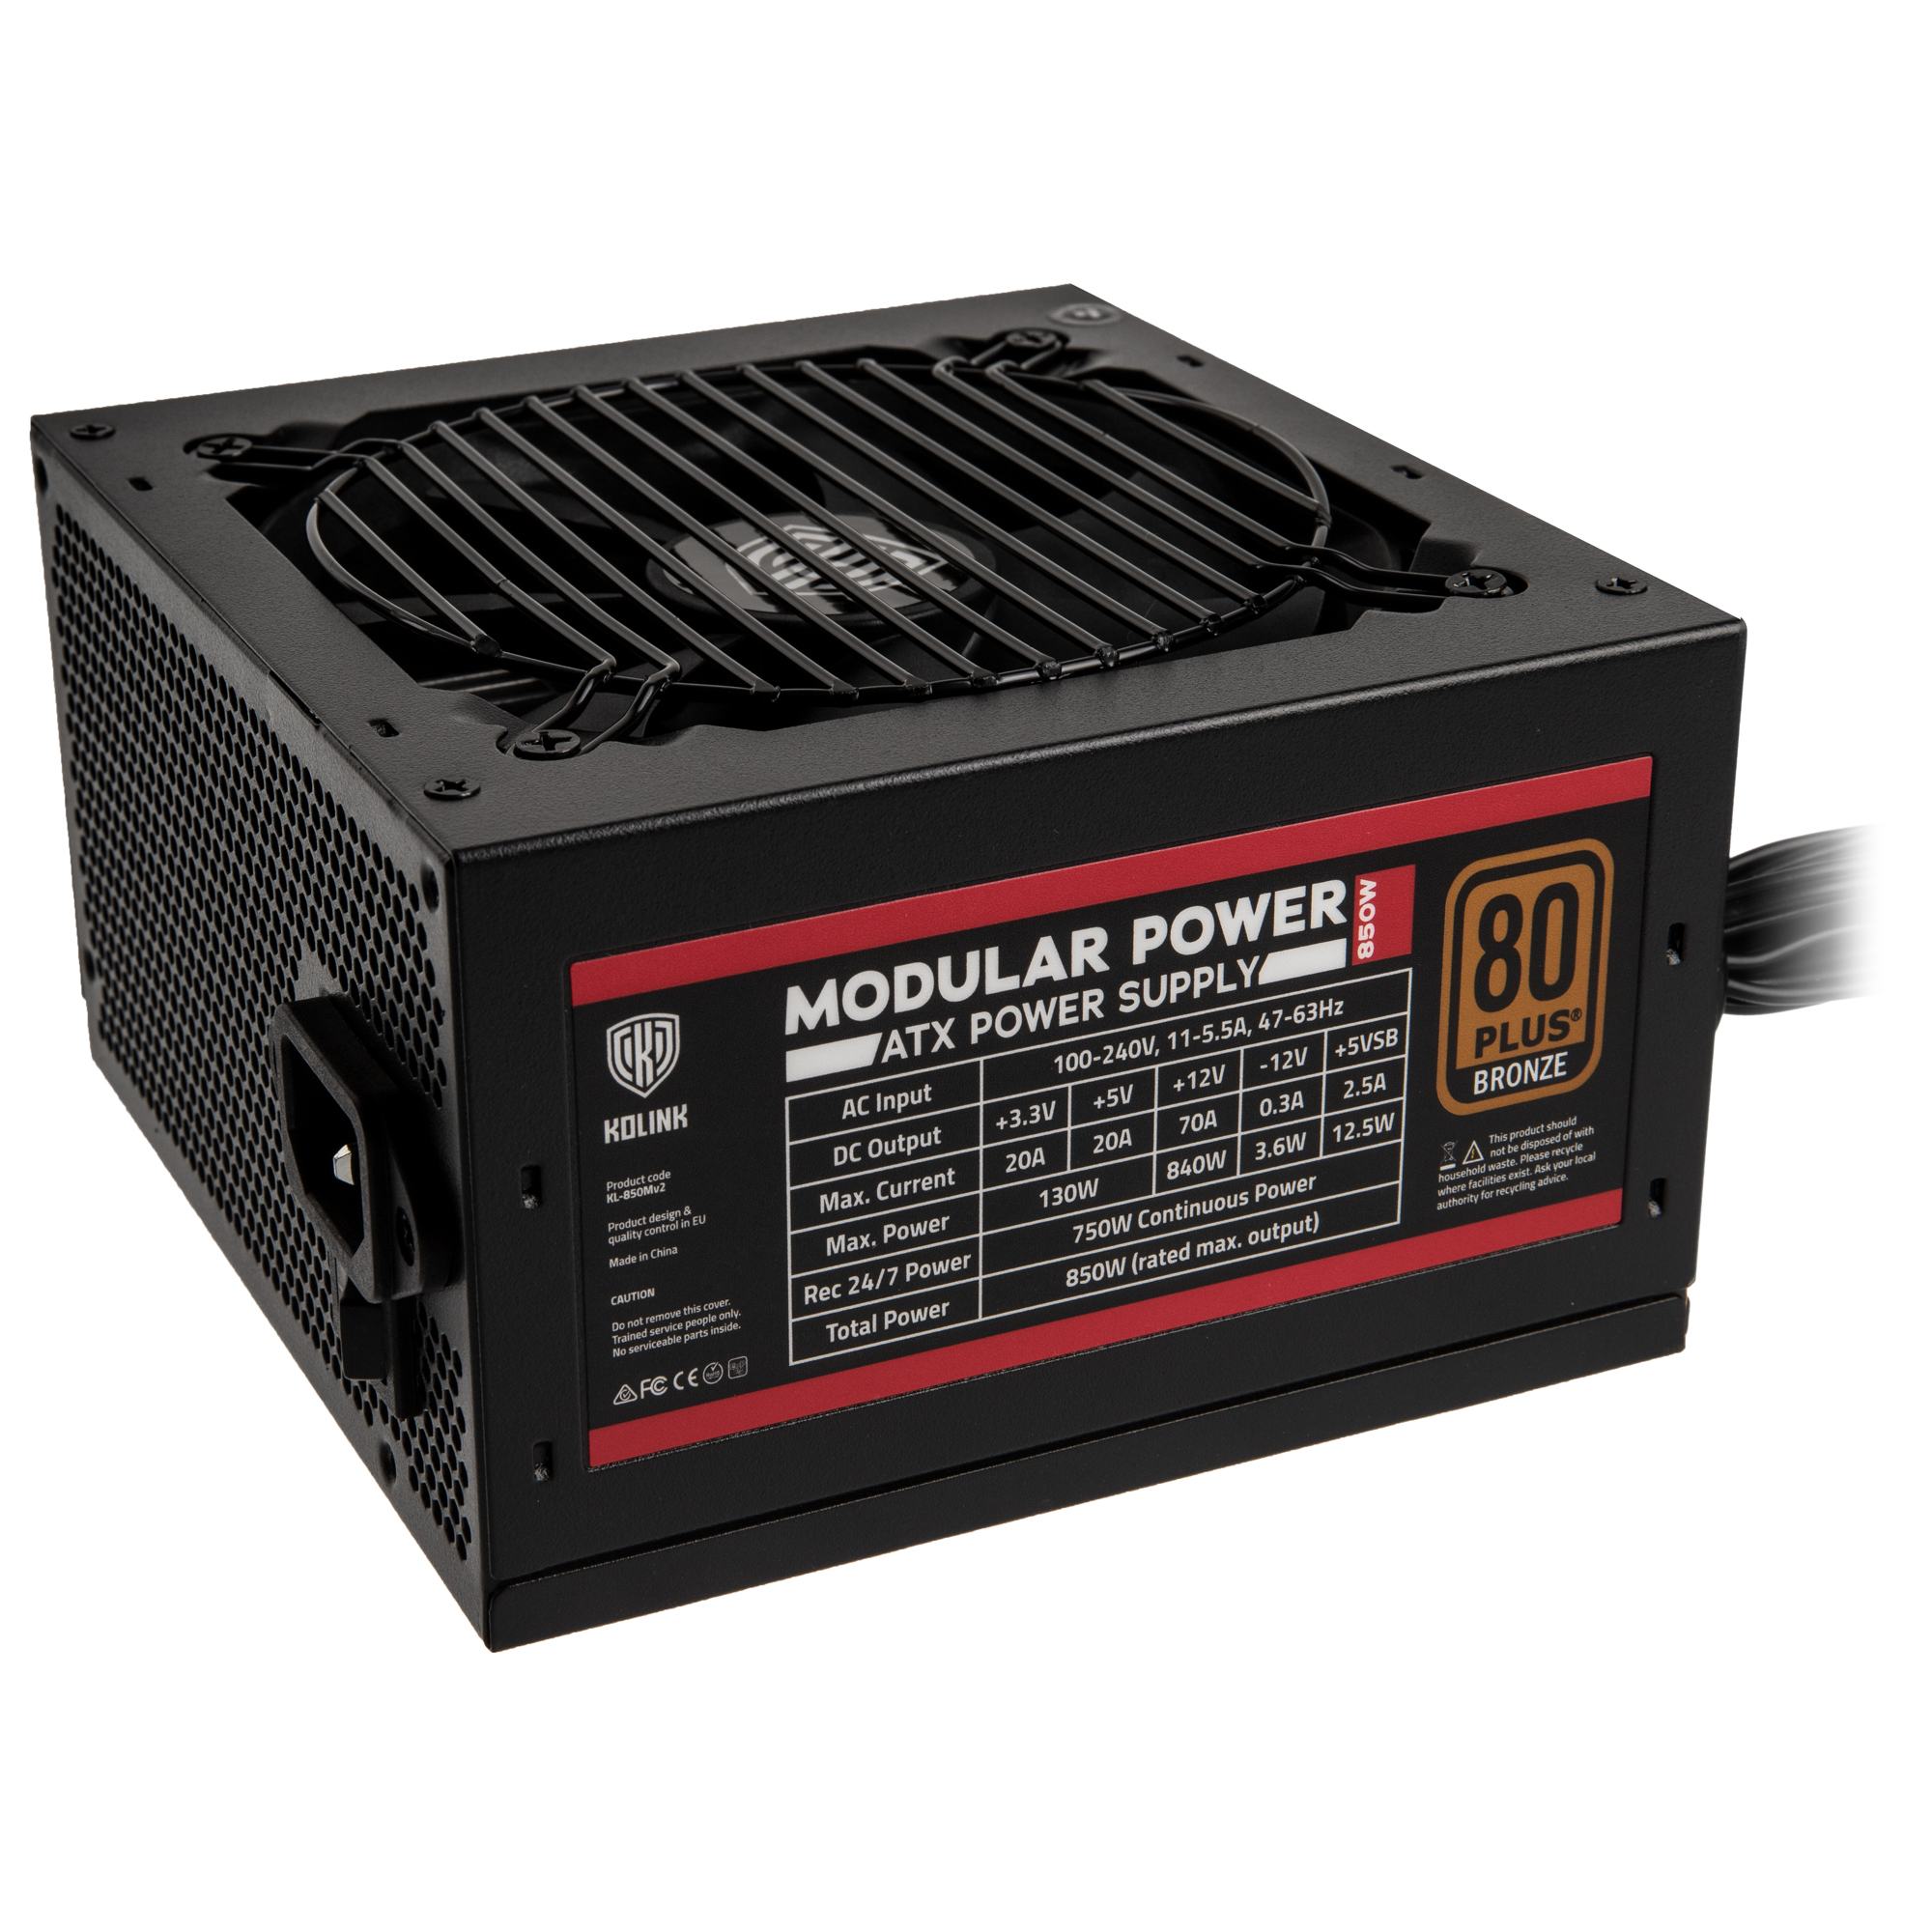 Kolink - Kolink Modular Power 850W 80 Plus Bronze Modular Power Supply